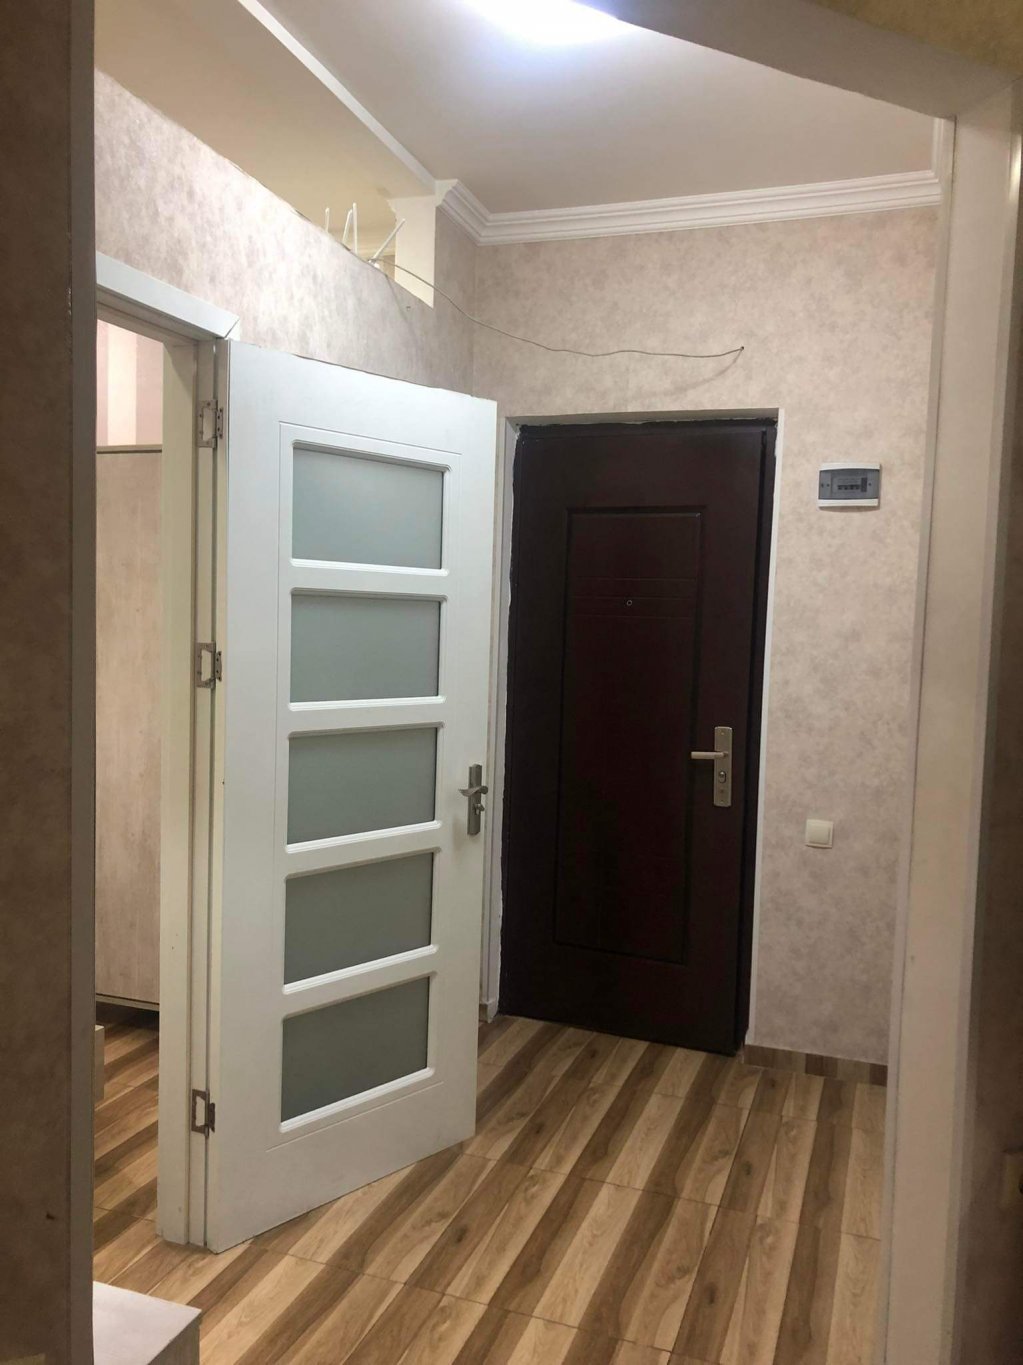 1-bedroom apartment on a street of Gorgasali id-1042 - Batumi Vacation Rentals